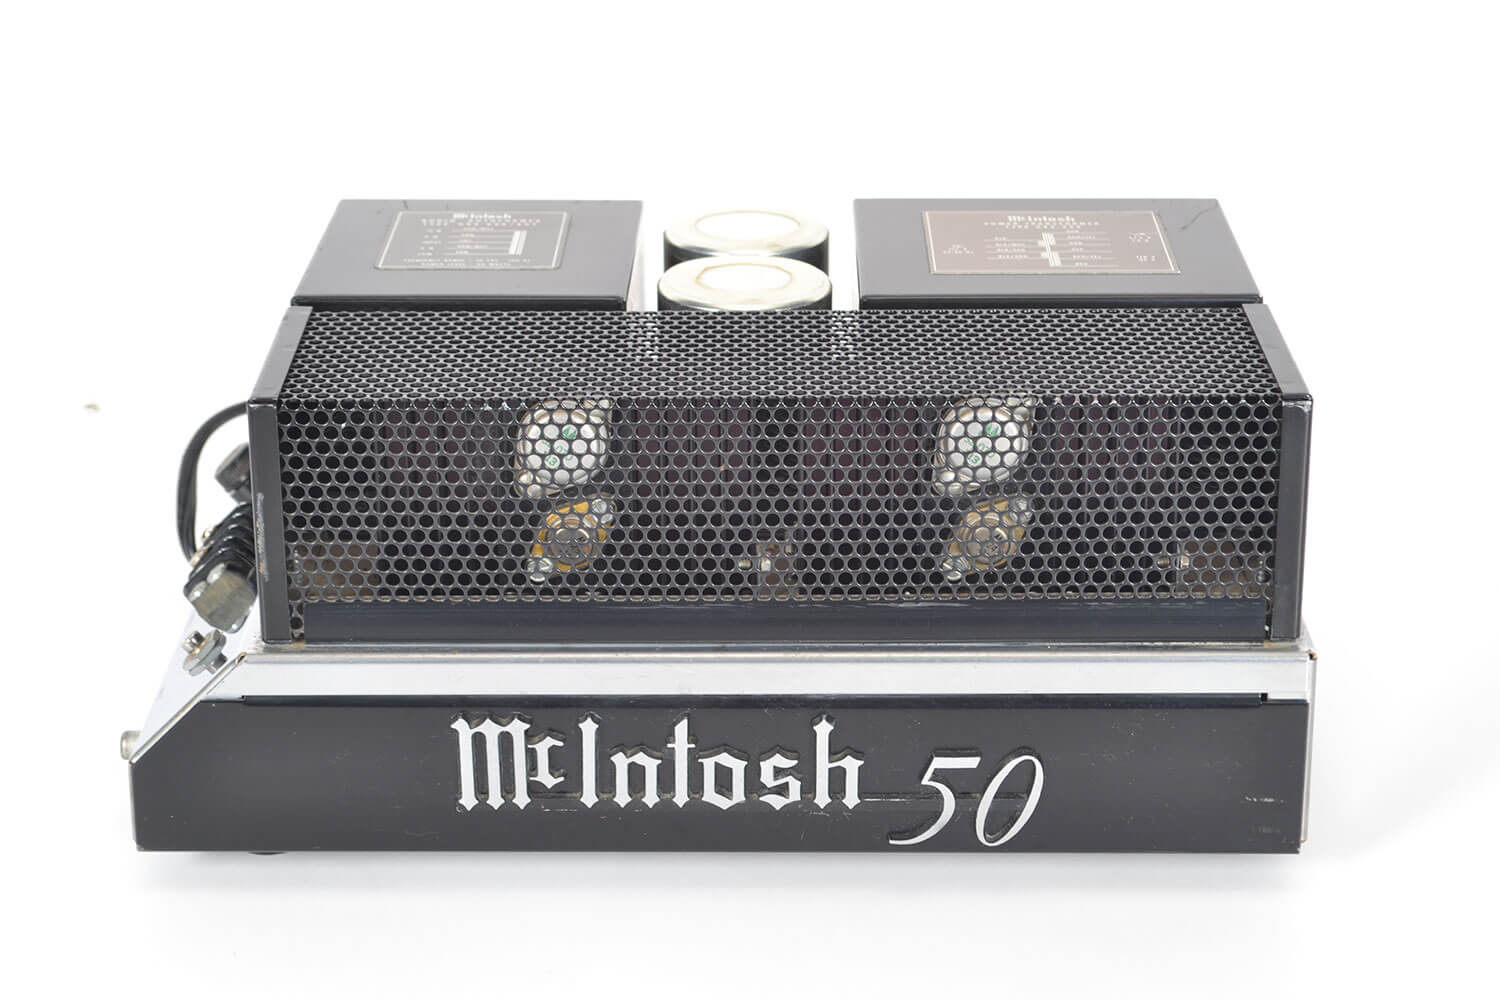 McIntosh MC 50 – High End Stereo Equipment We Buy